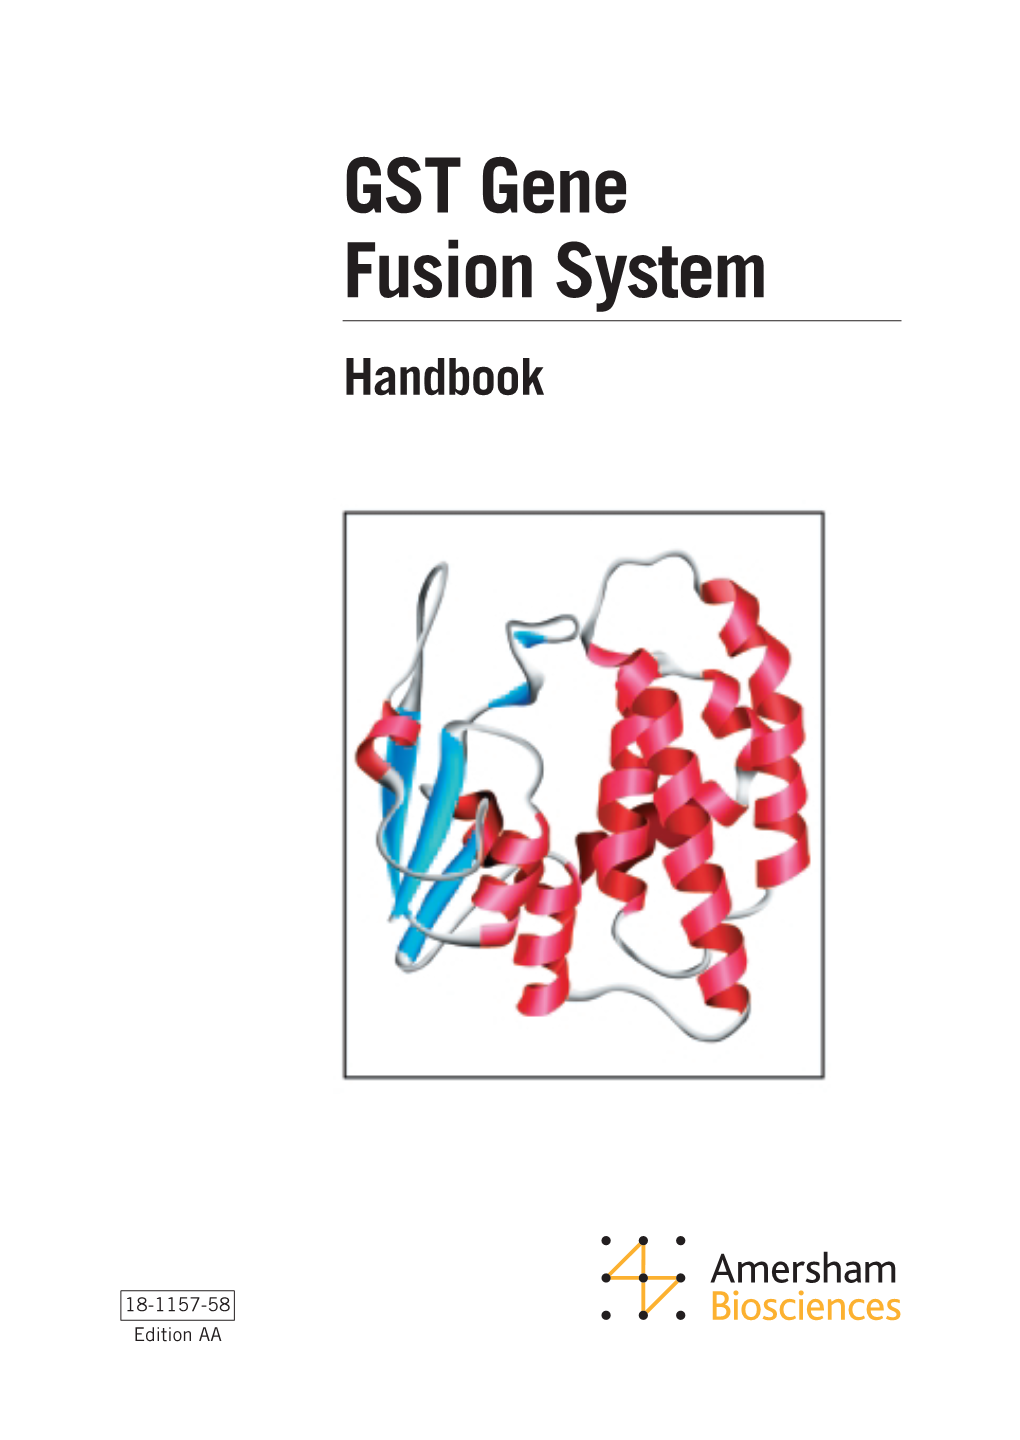 GST Gene Fusion System Handbook Production: RAK Design AB Handbook